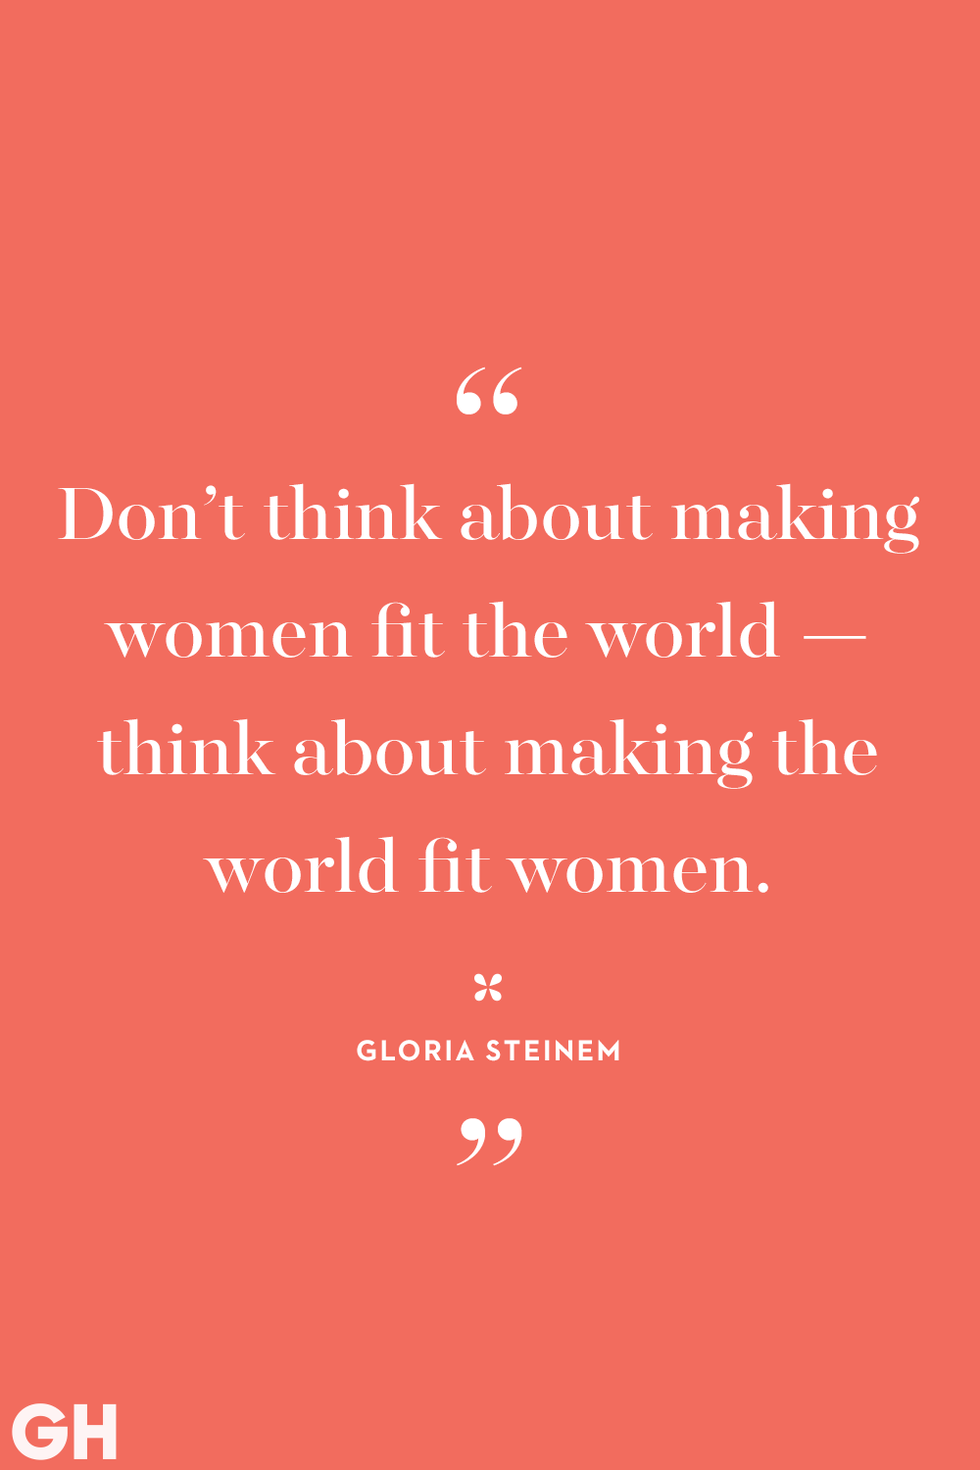 International Women's Day 2021: A message from the Women's Best